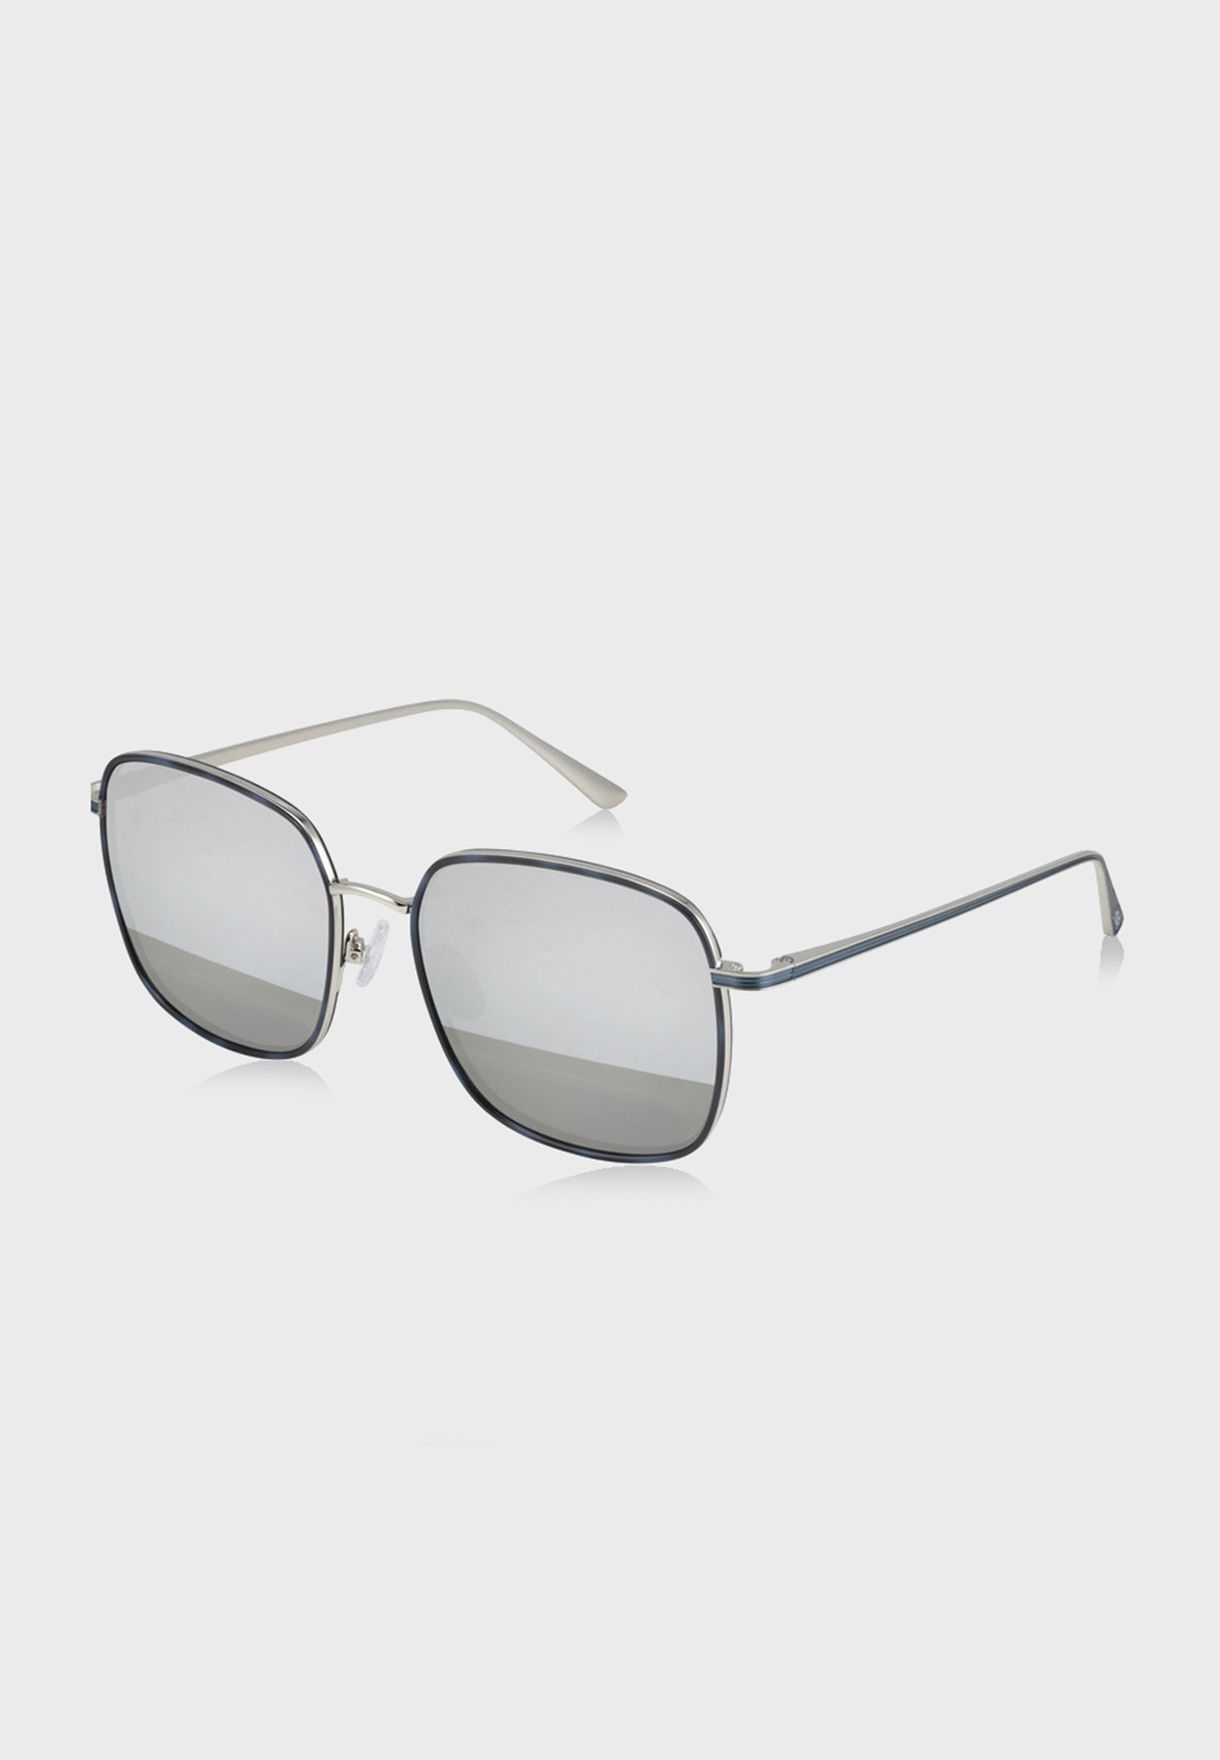 L SR779003 Oversized Sunglasses